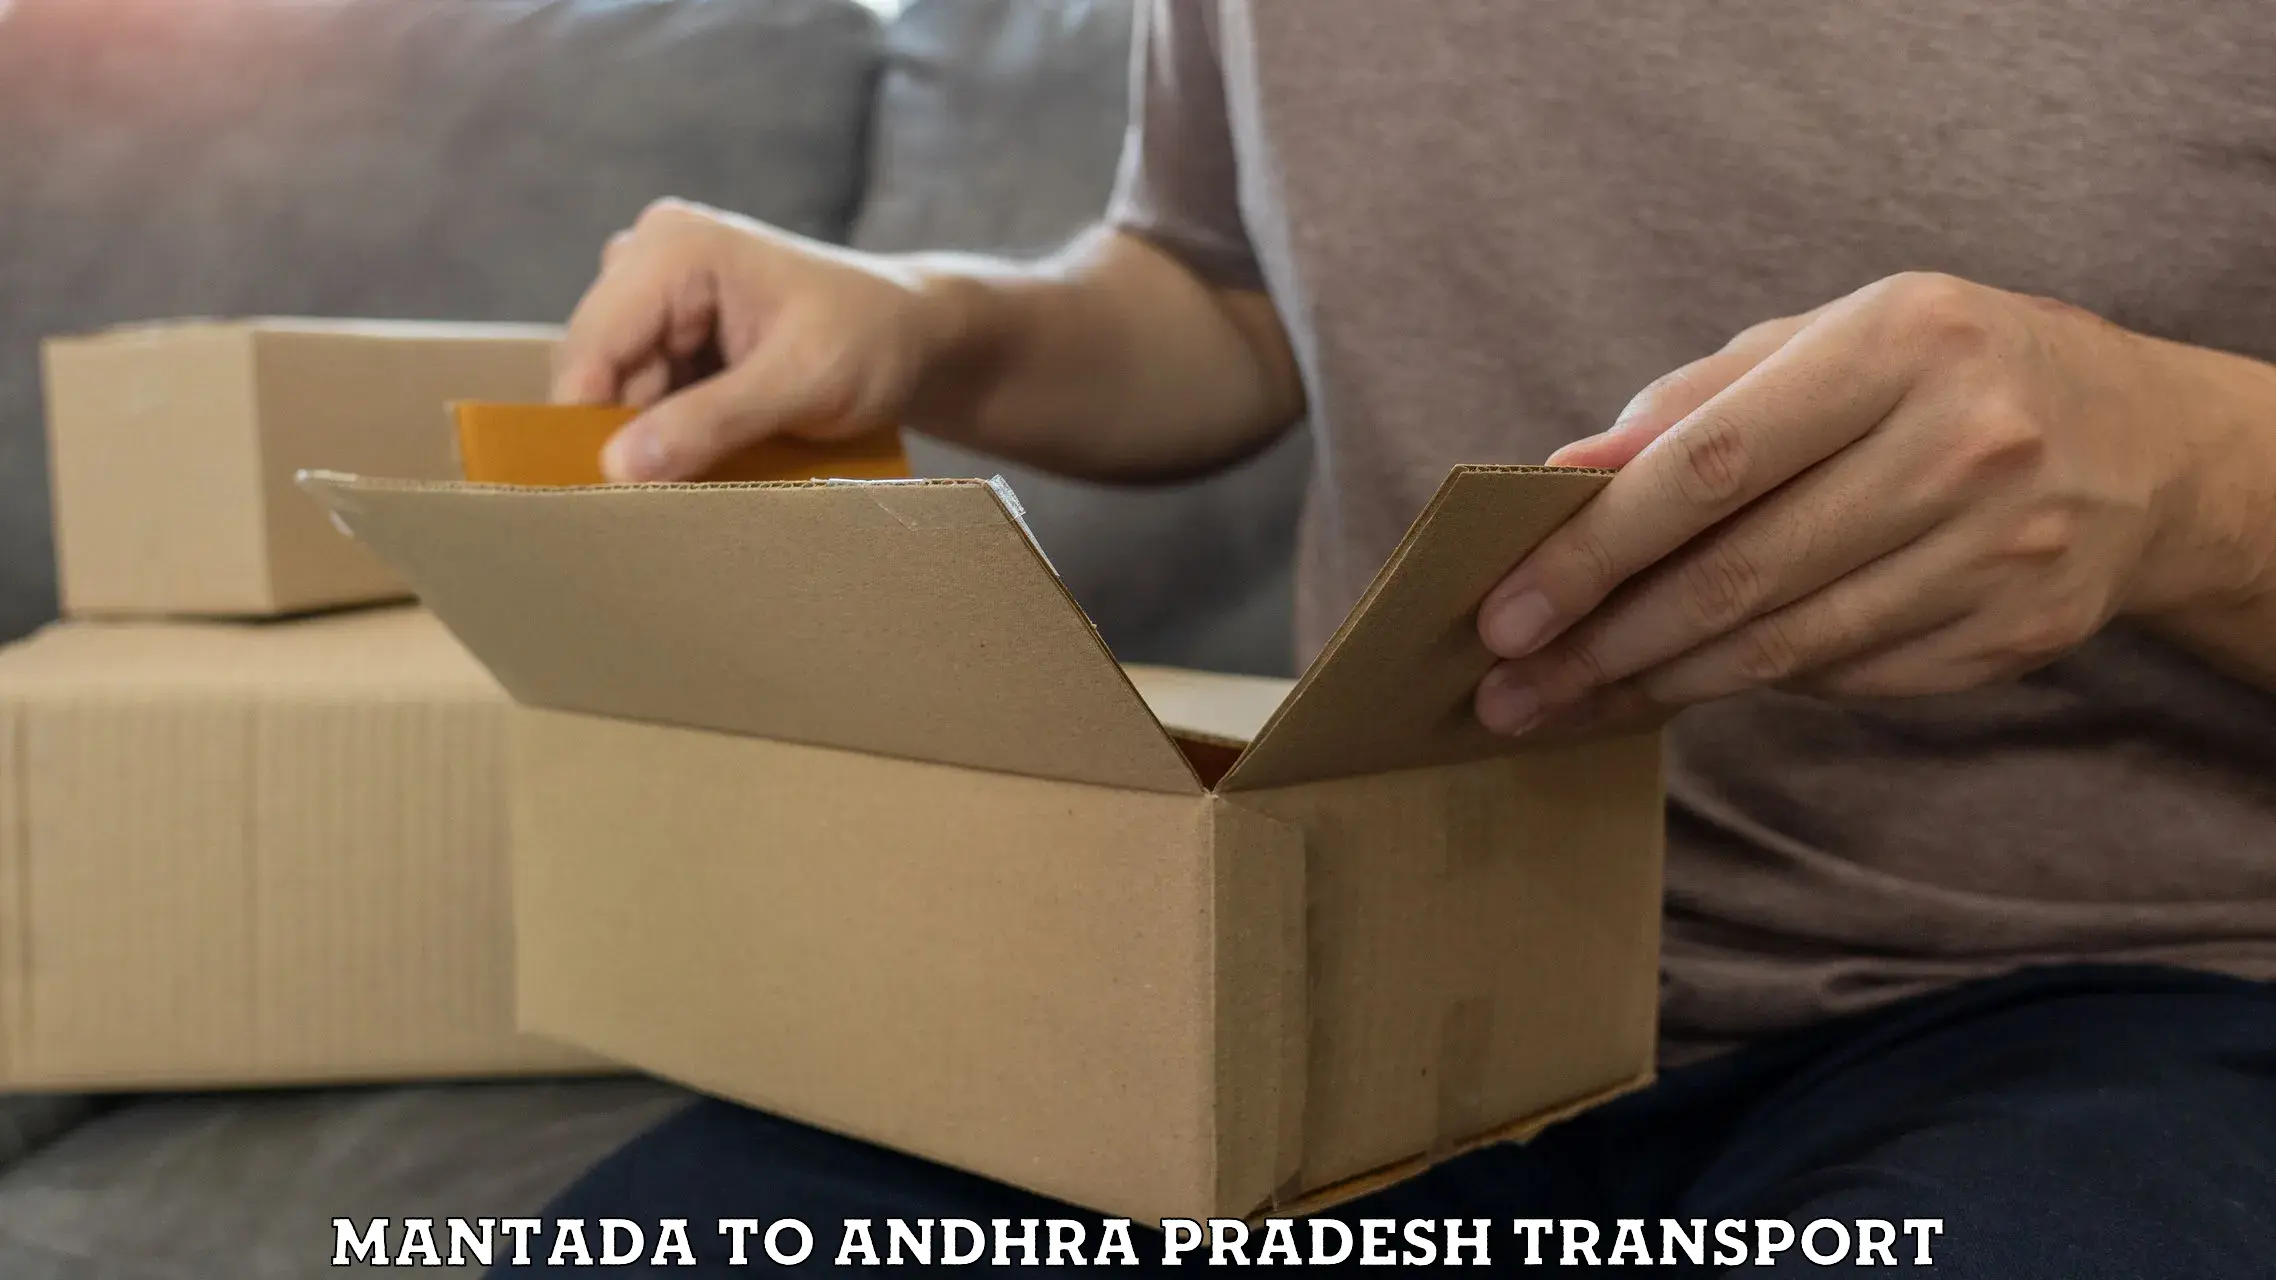 Truck transport companies in India Mantada to Tirupati